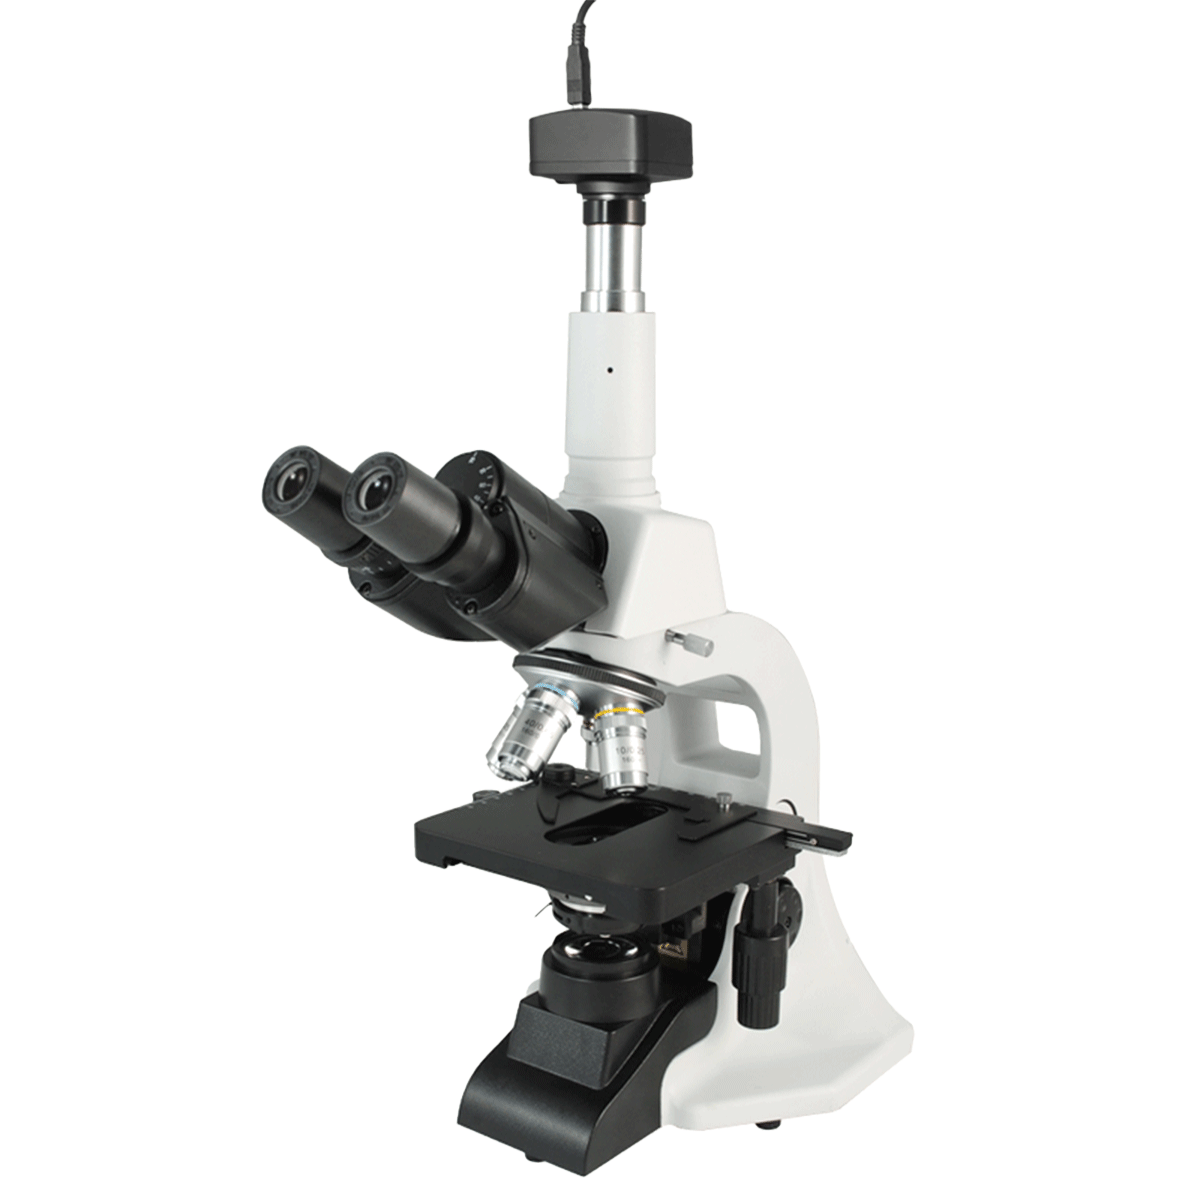 microscope clipart lab tech